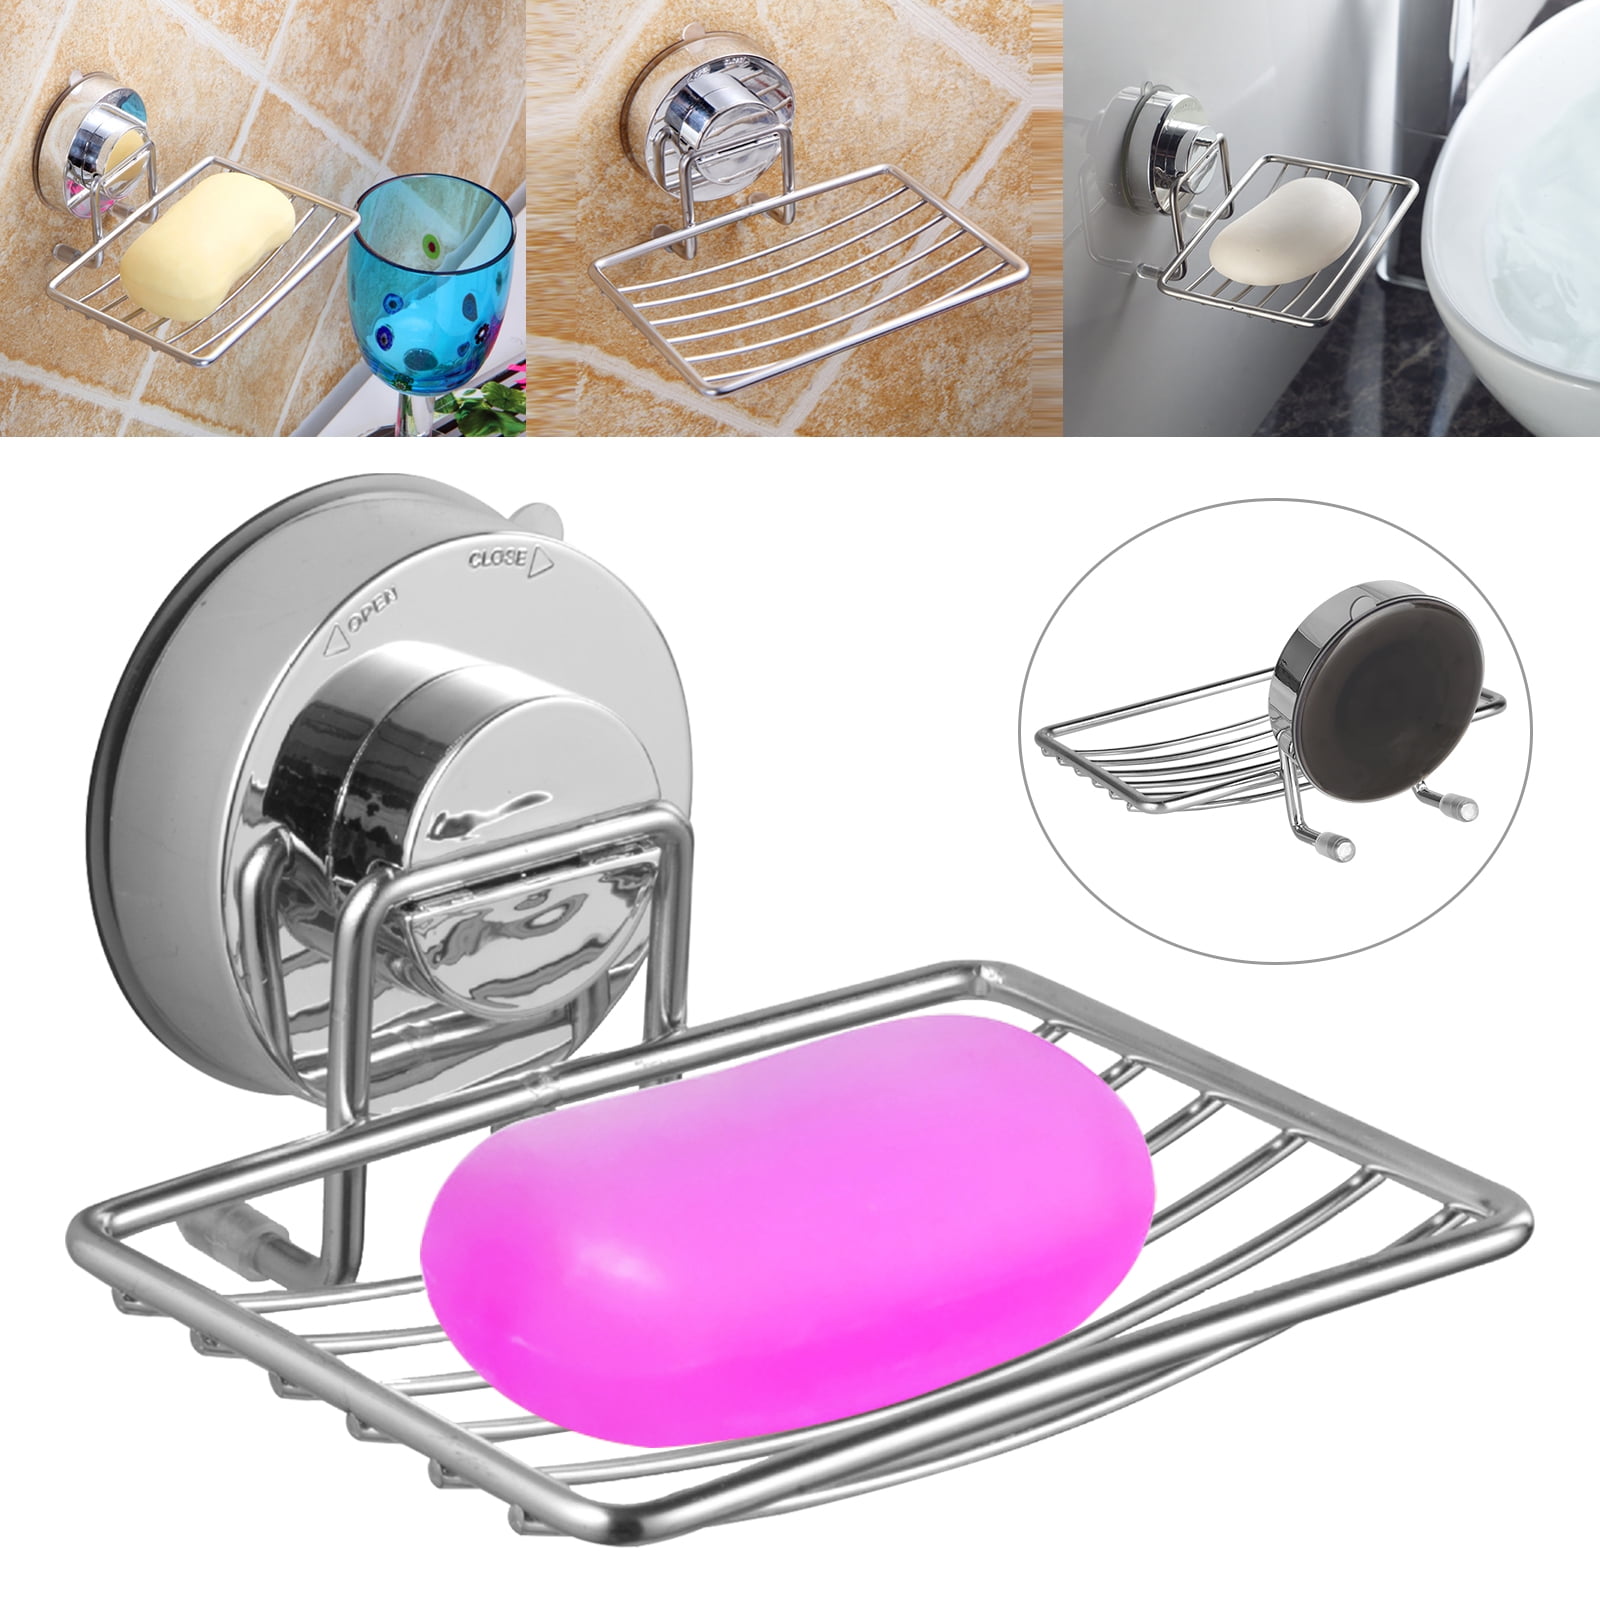 EEEkit Powerful Vacuum Suction Cup Soap Dish Holder, No